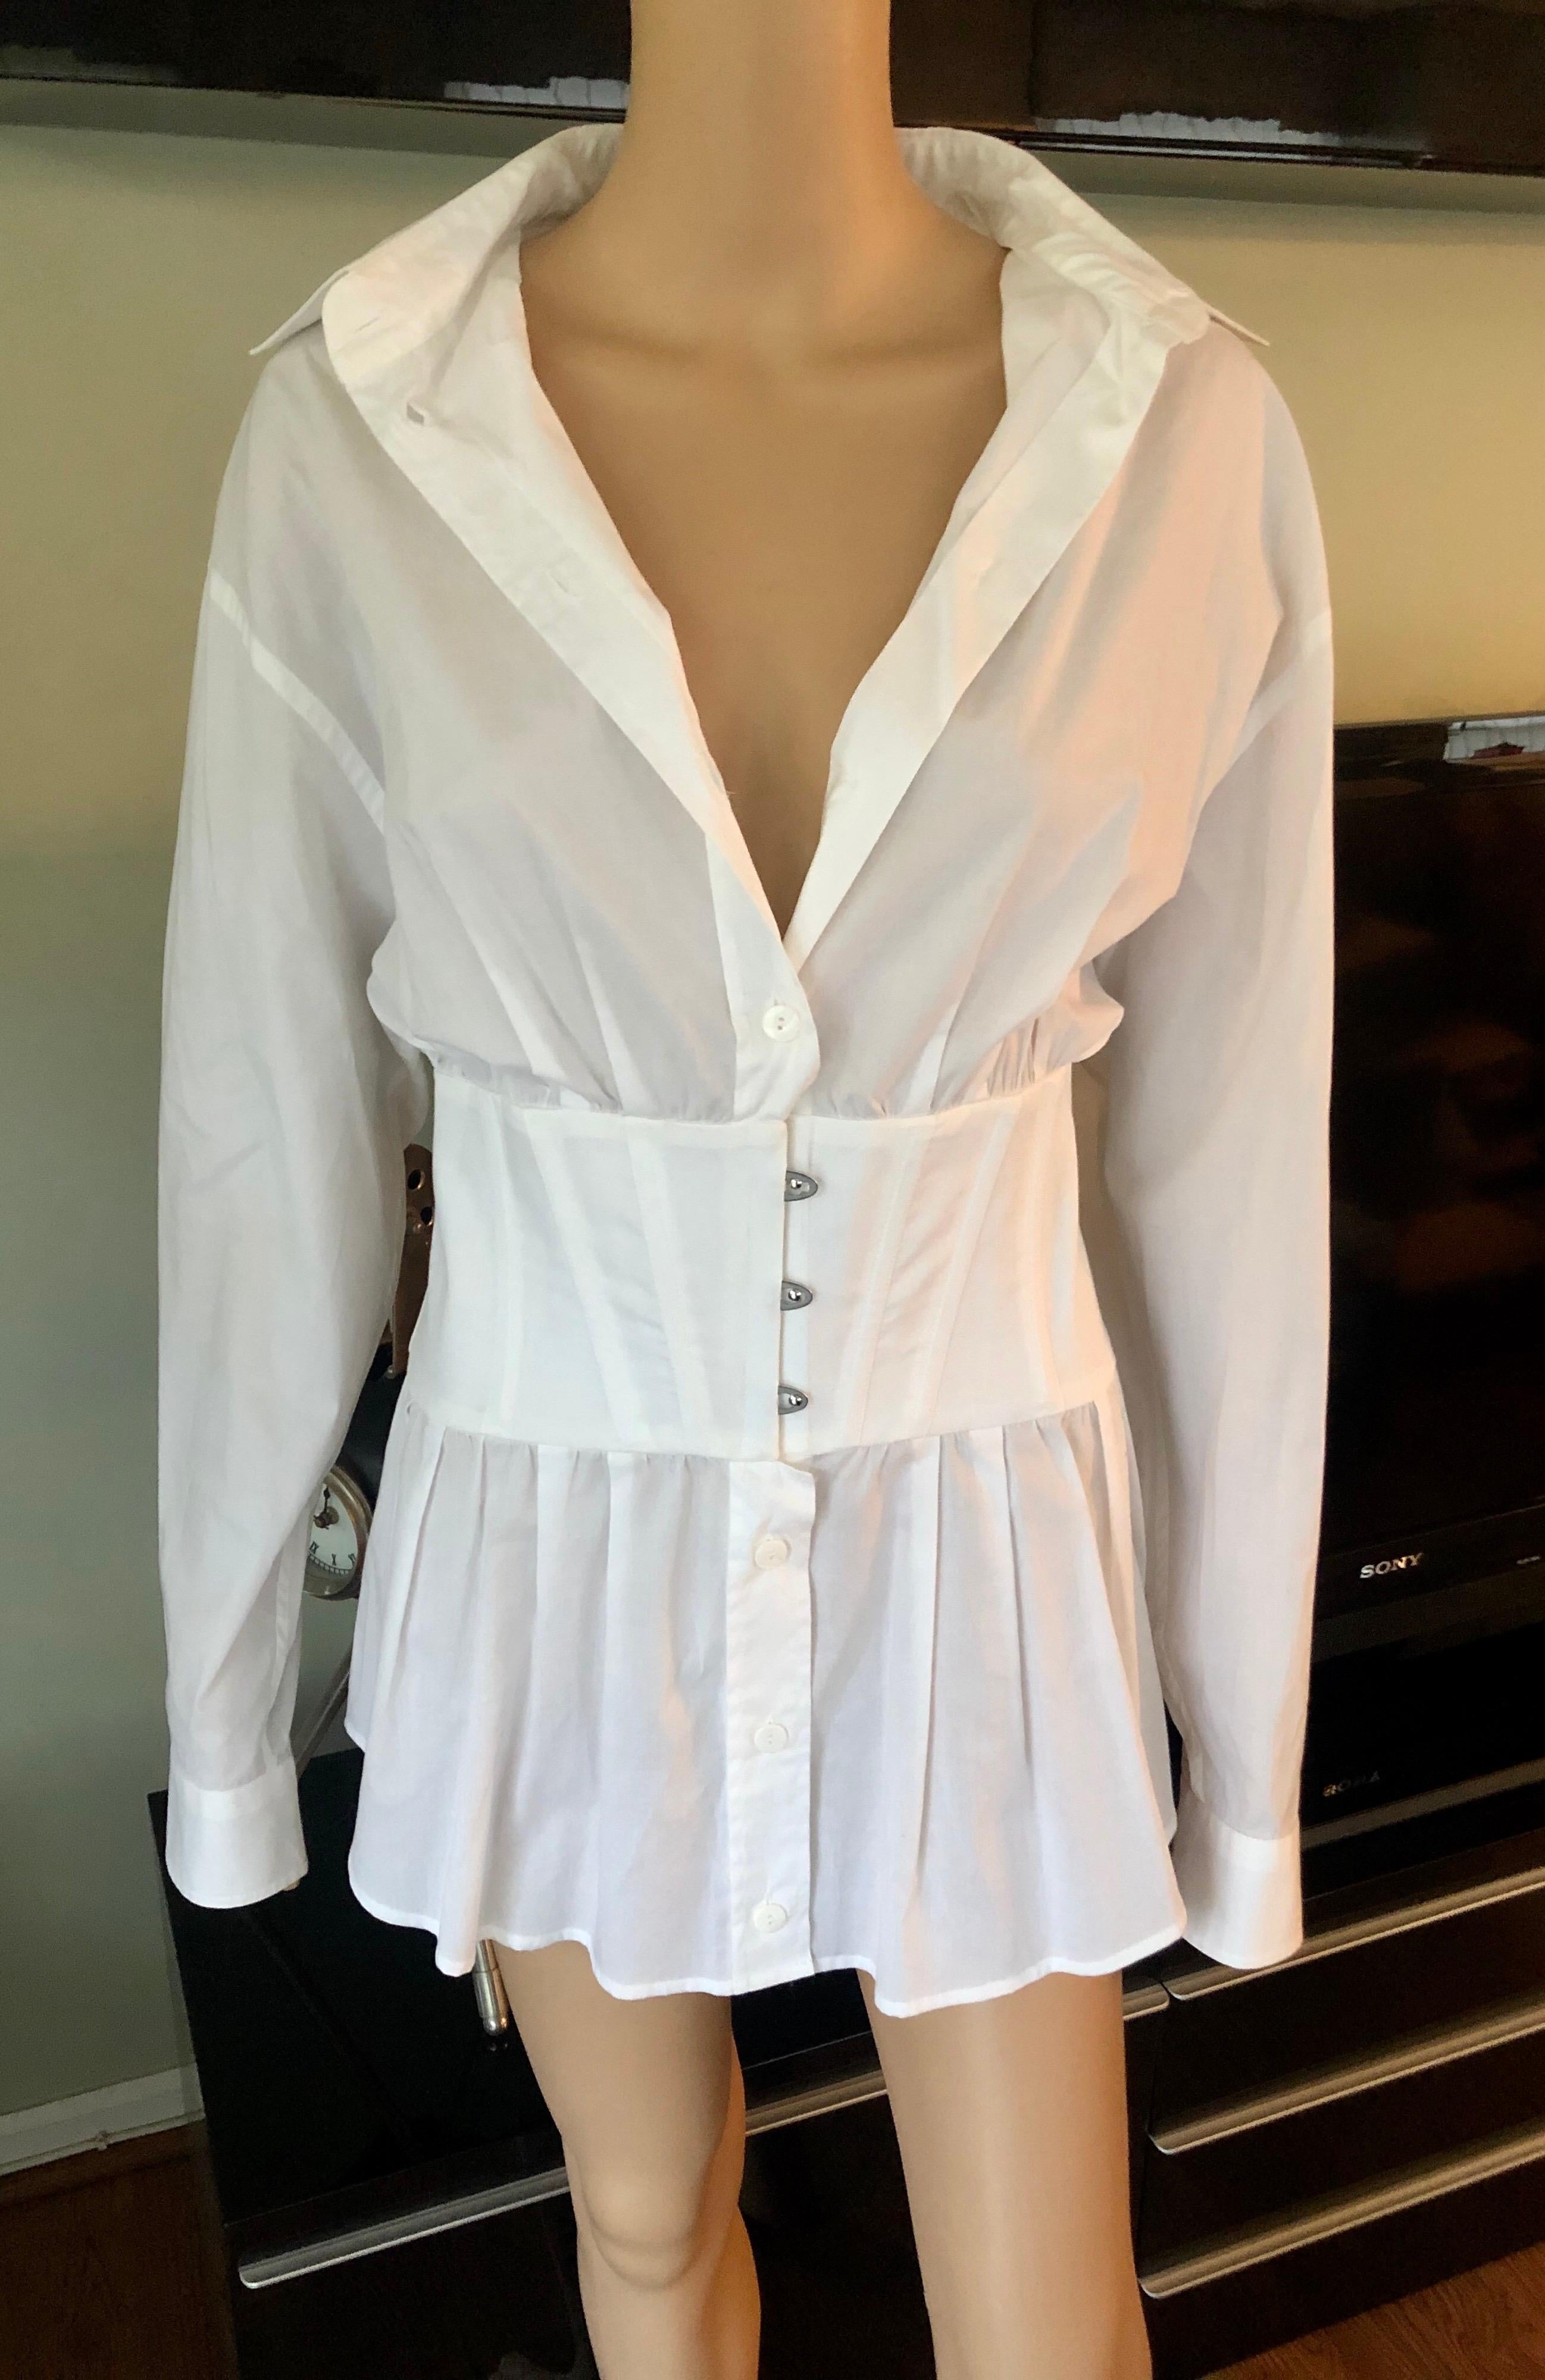 white shirt dress with black corset